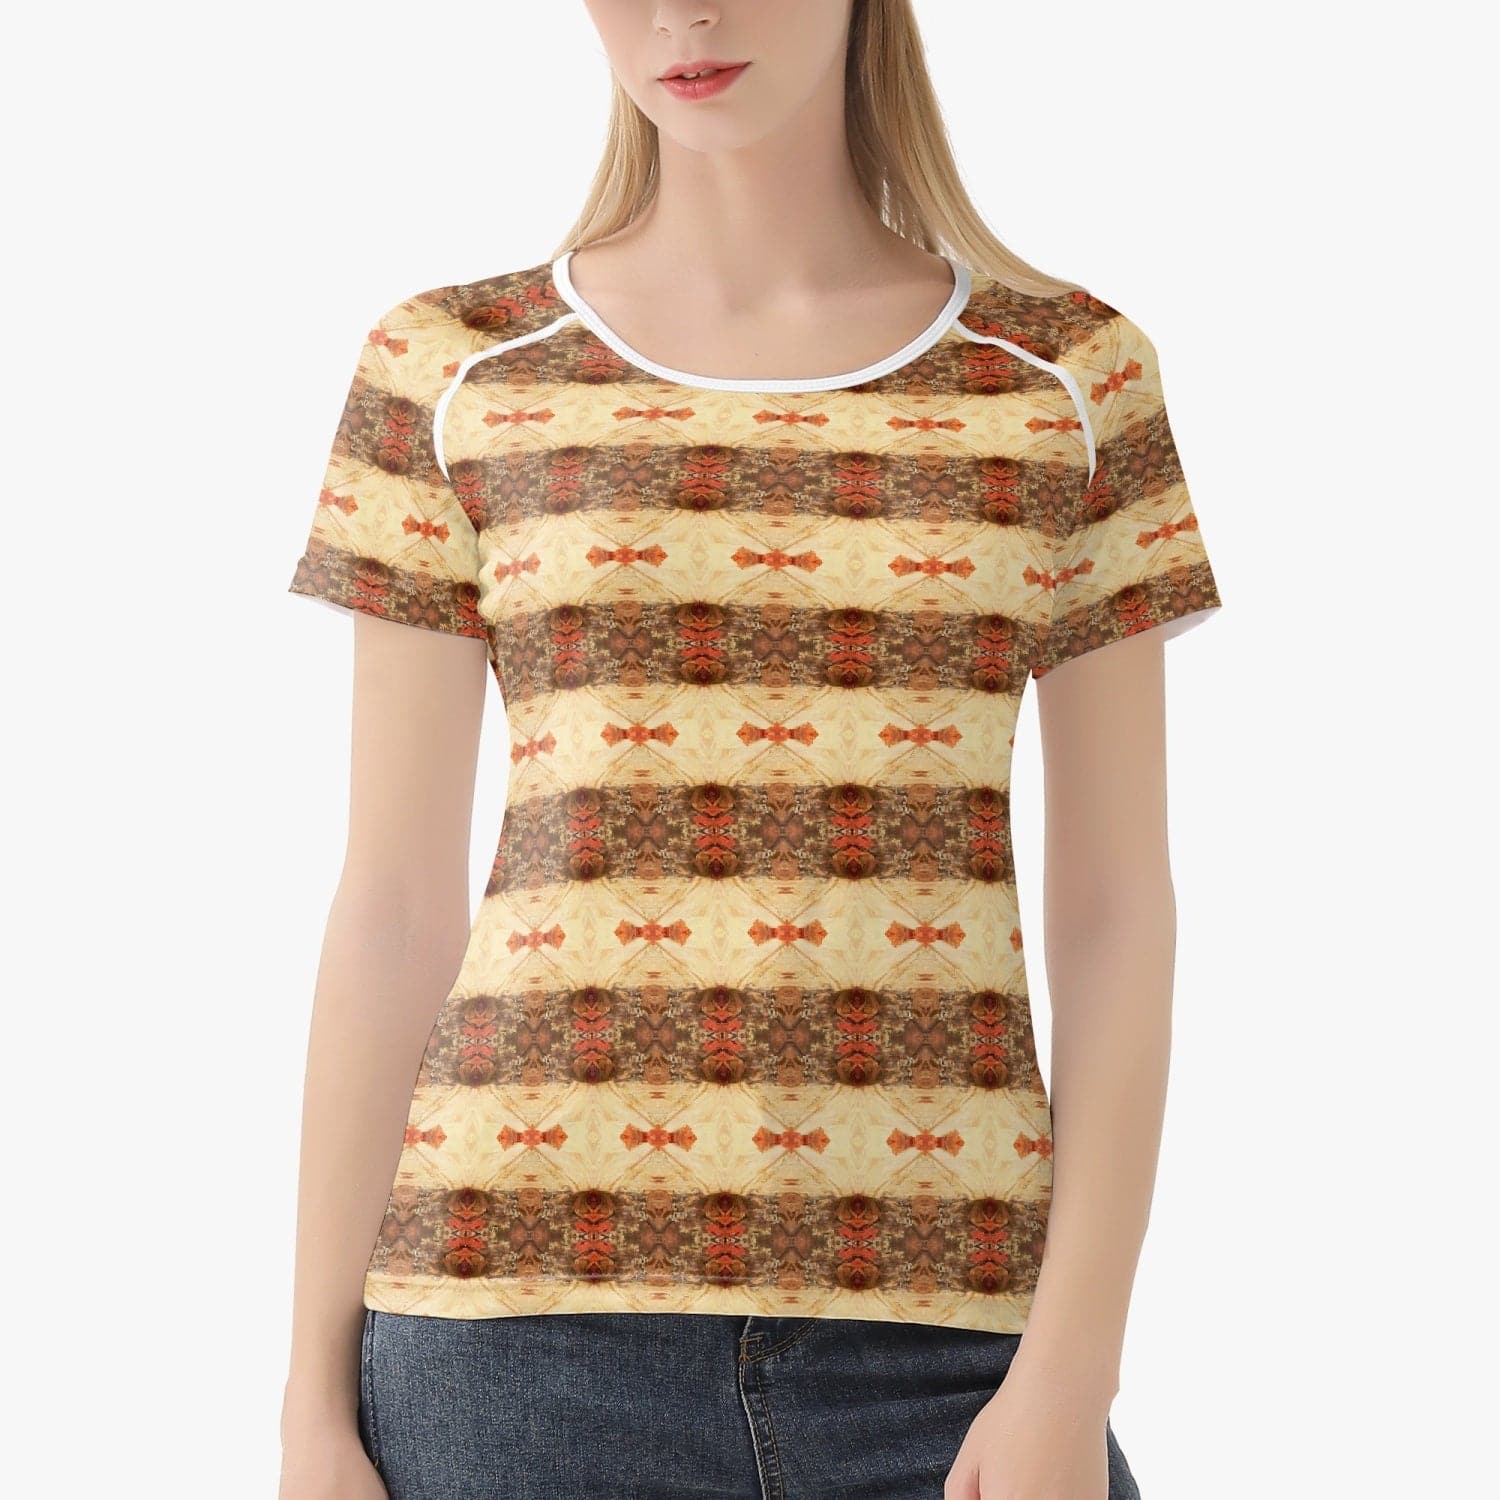 Your Divine Inheritance , Handmade Hot Women T-shirt Sports/ Yoga Top, by Sensus Studio Design